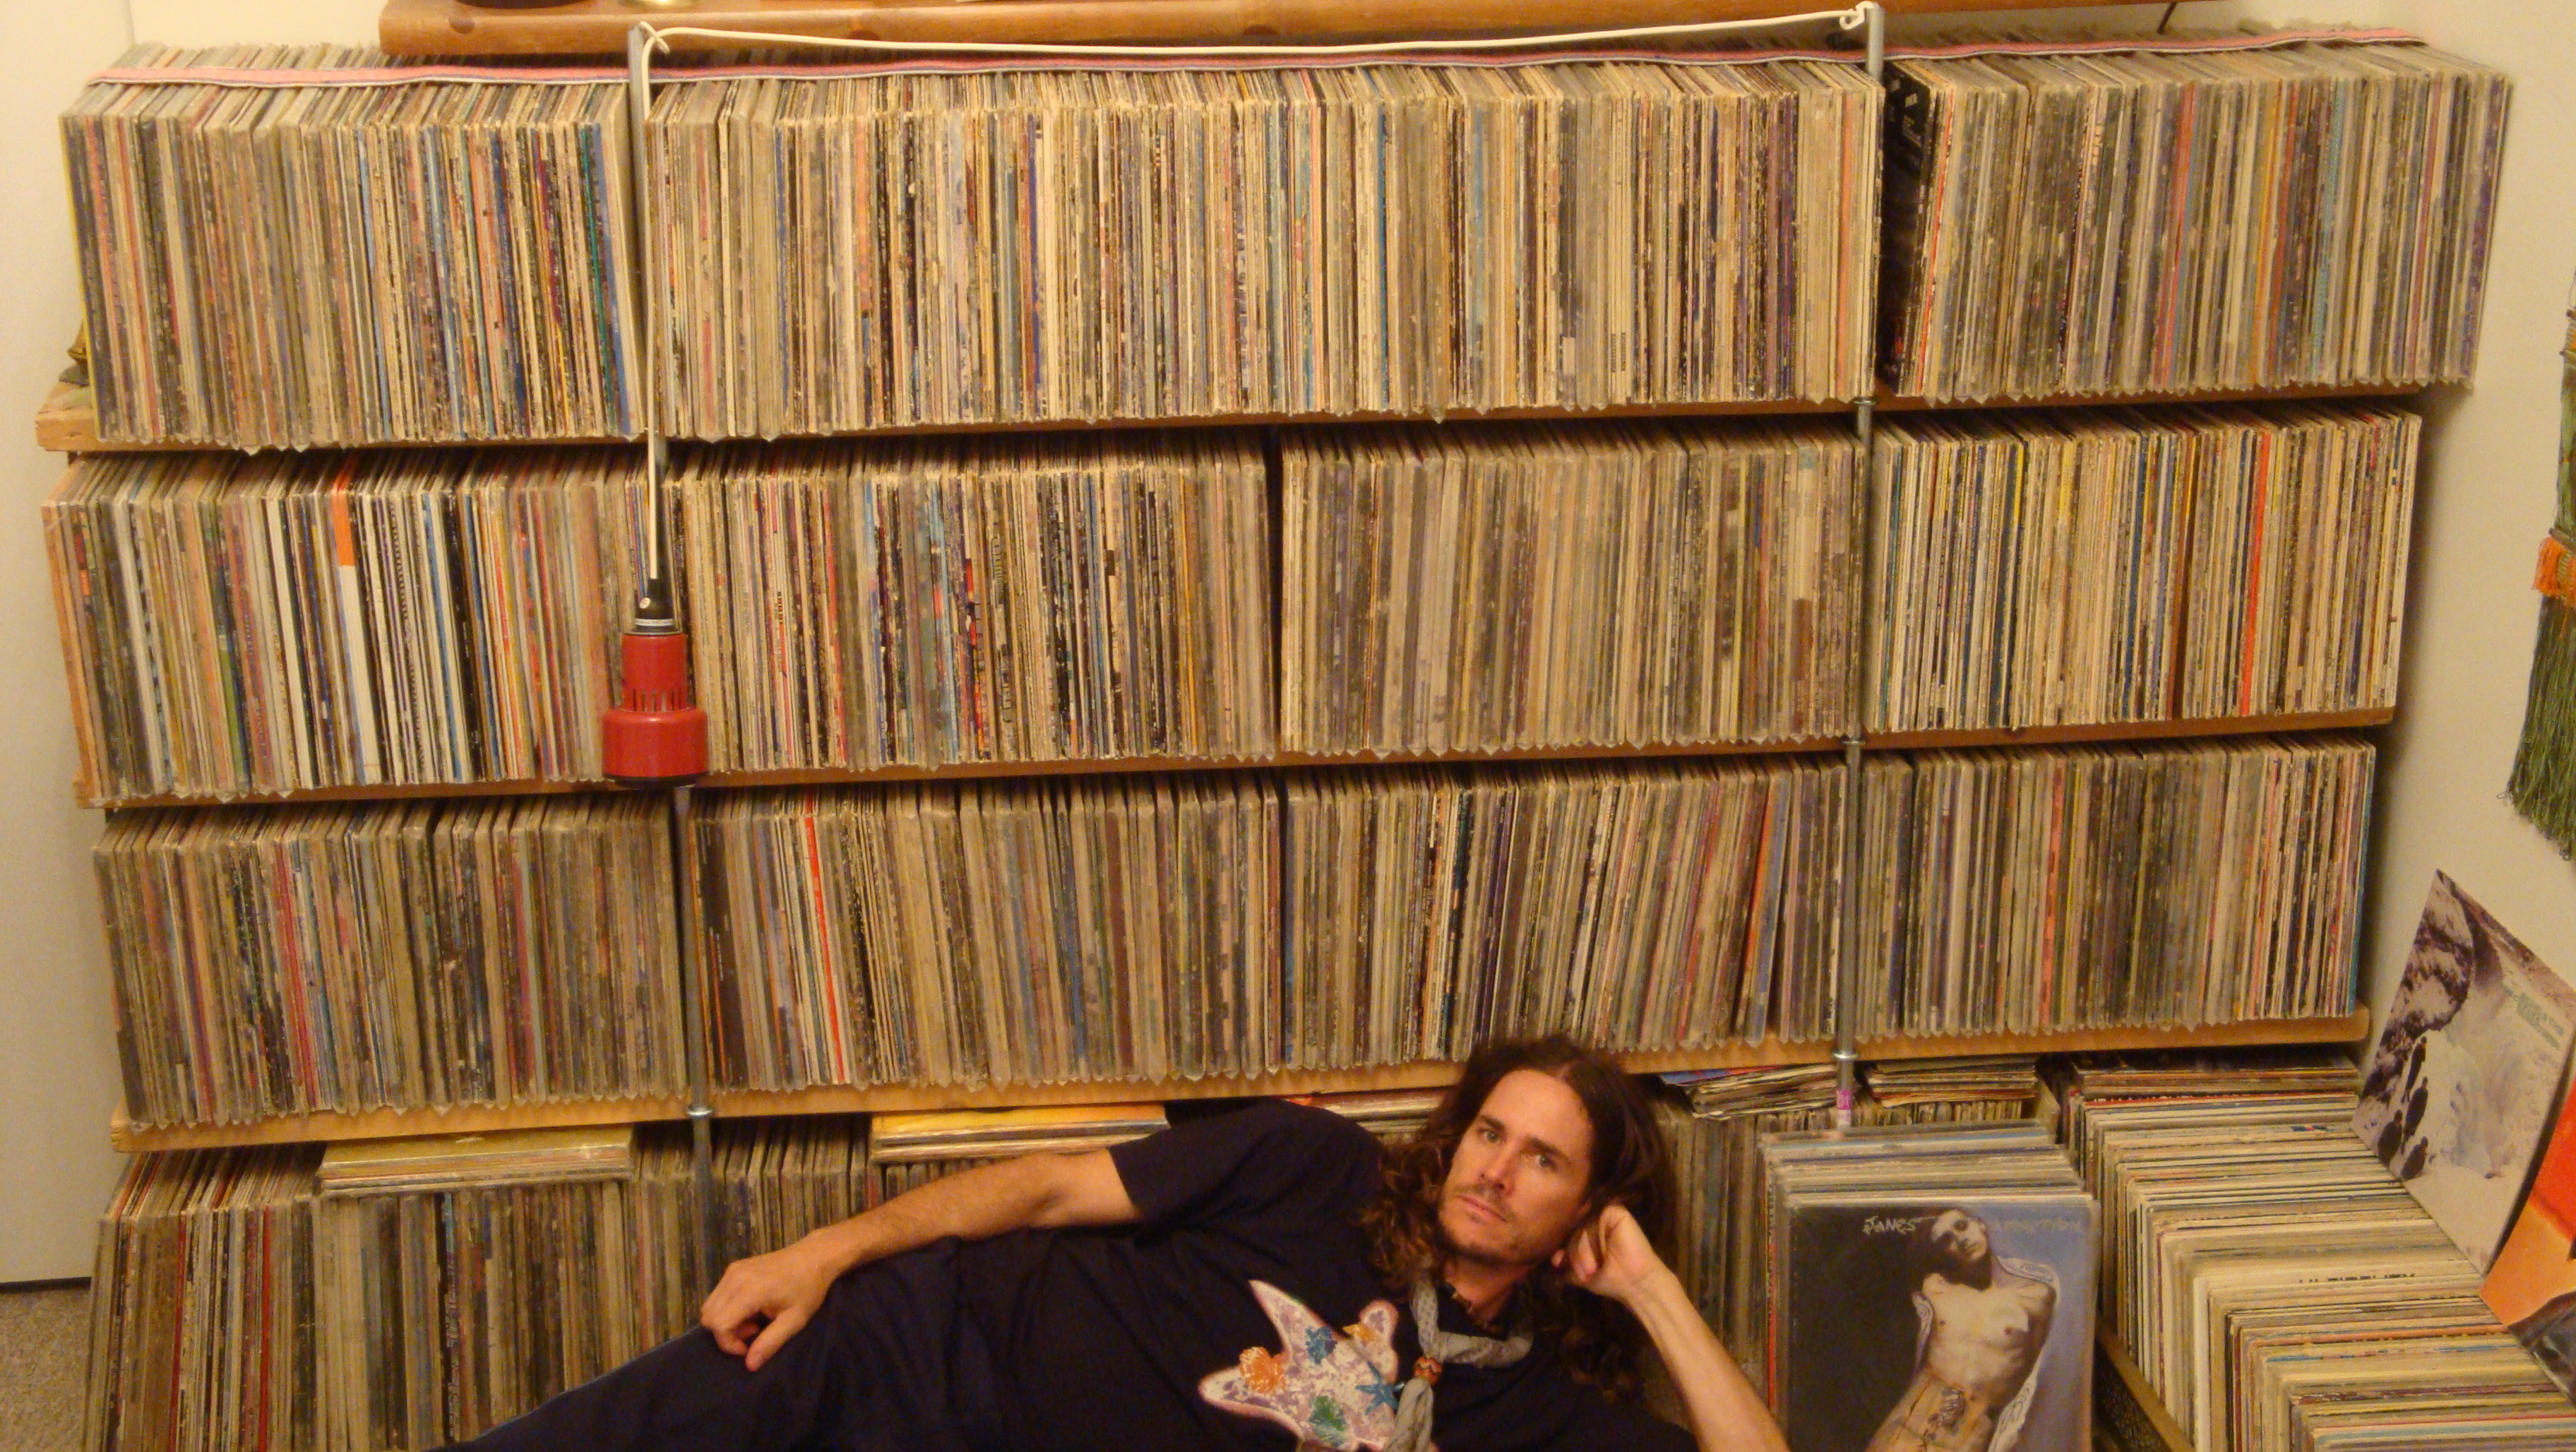 dj magicalwonderlandcarnivalco 'vinyl collection'